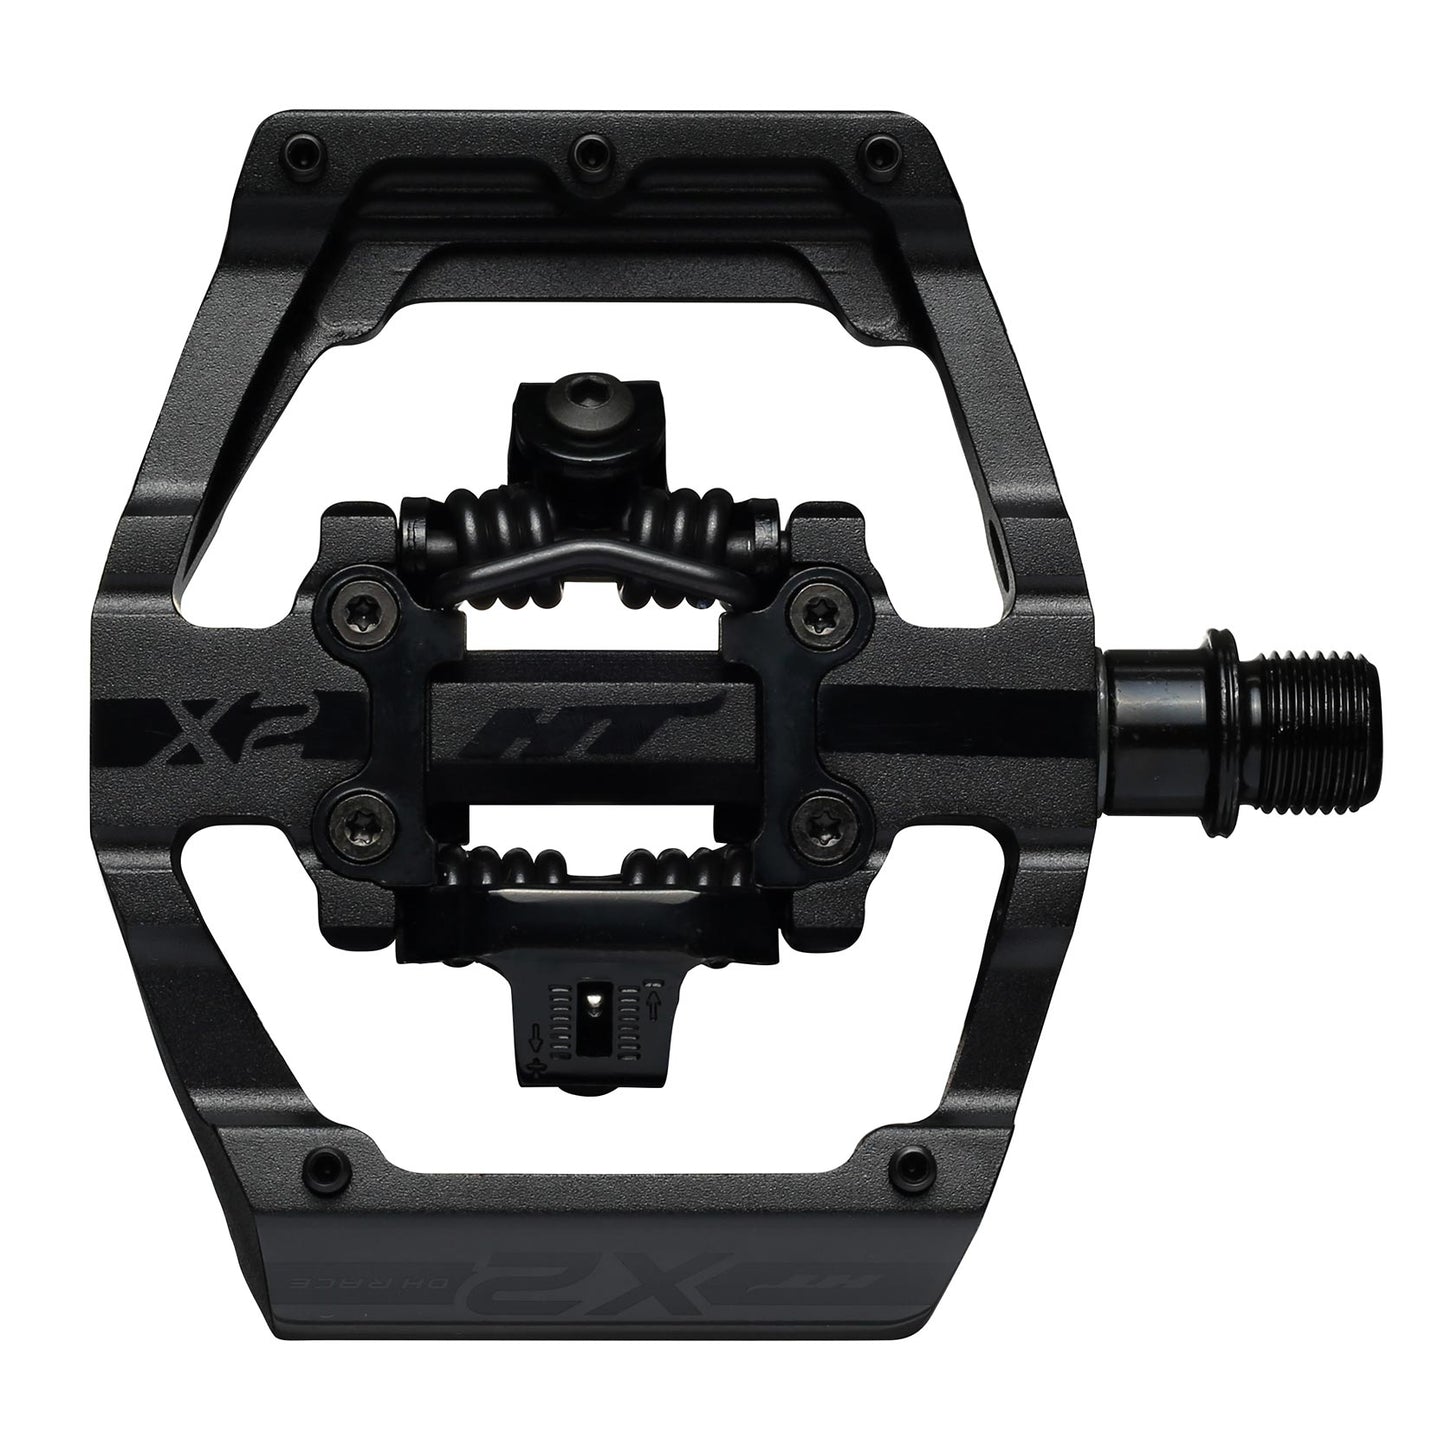 Ht X2 Pedals Alloy / CNC CRMO - Stealth Black